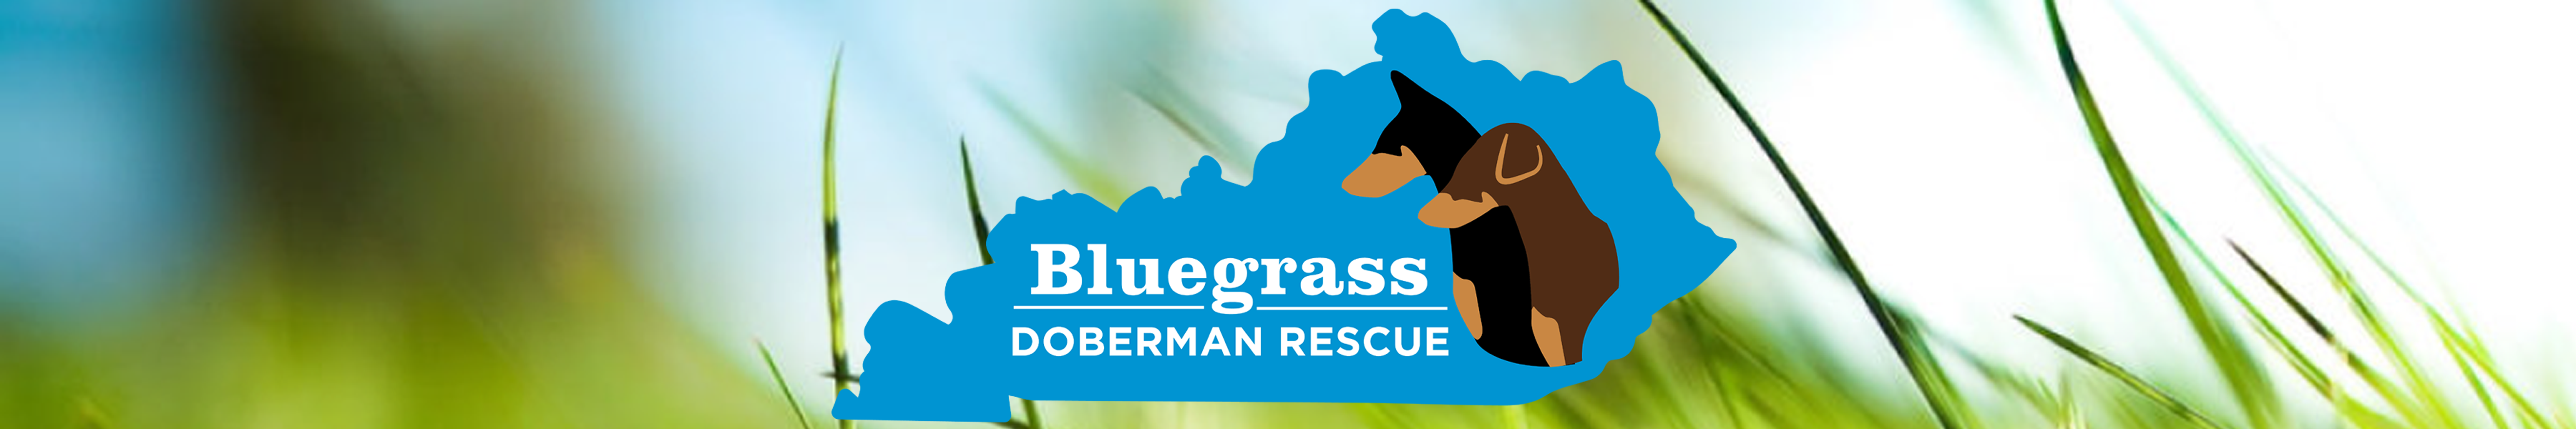 Bluegrass Doberman Rescue